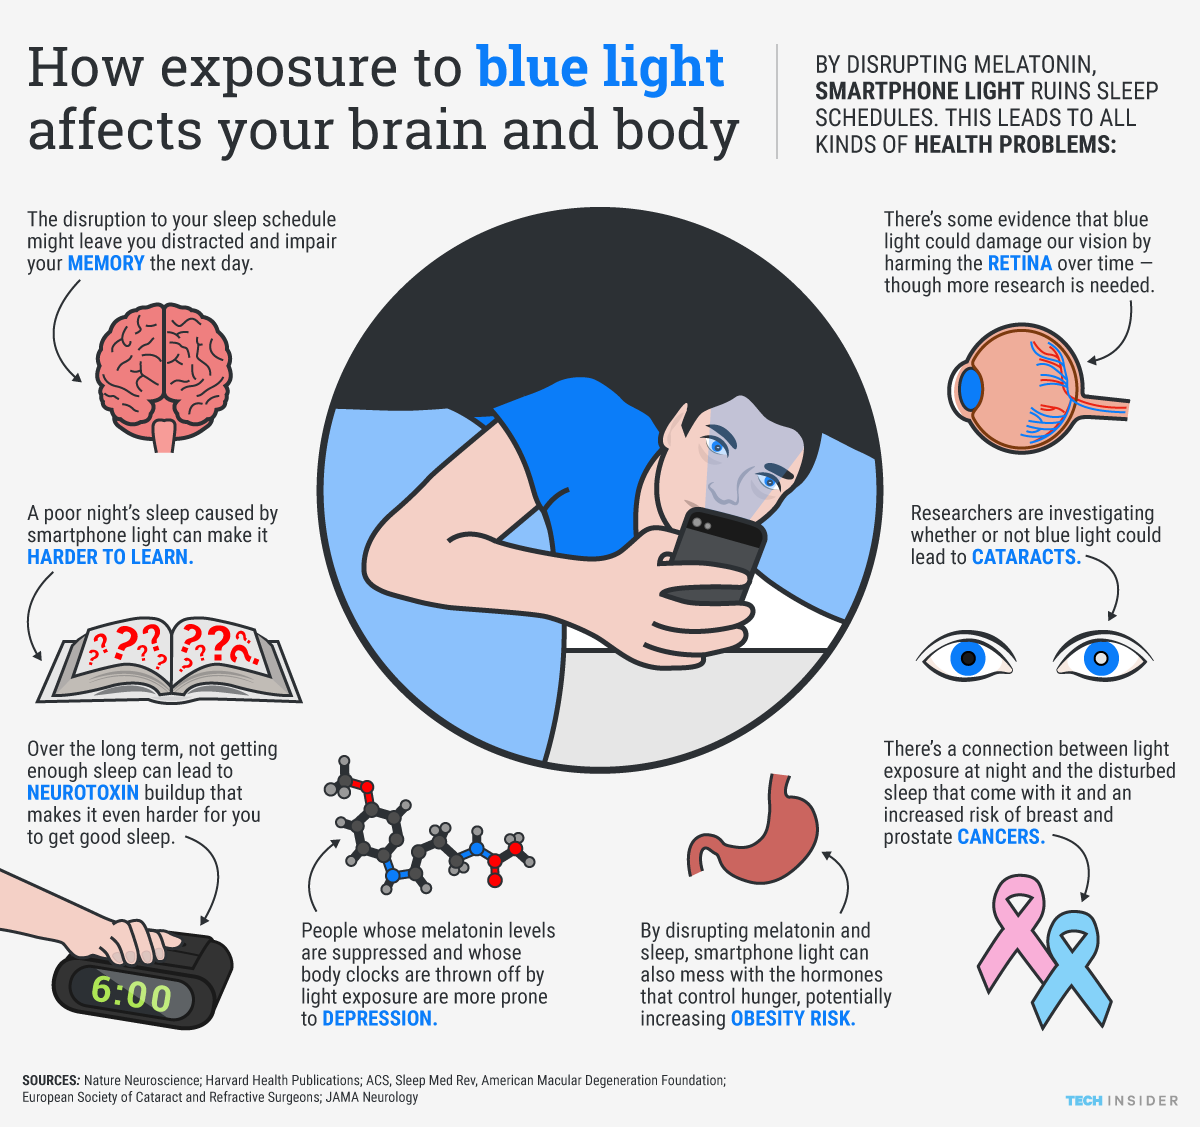 Will blue light damage my eyes?